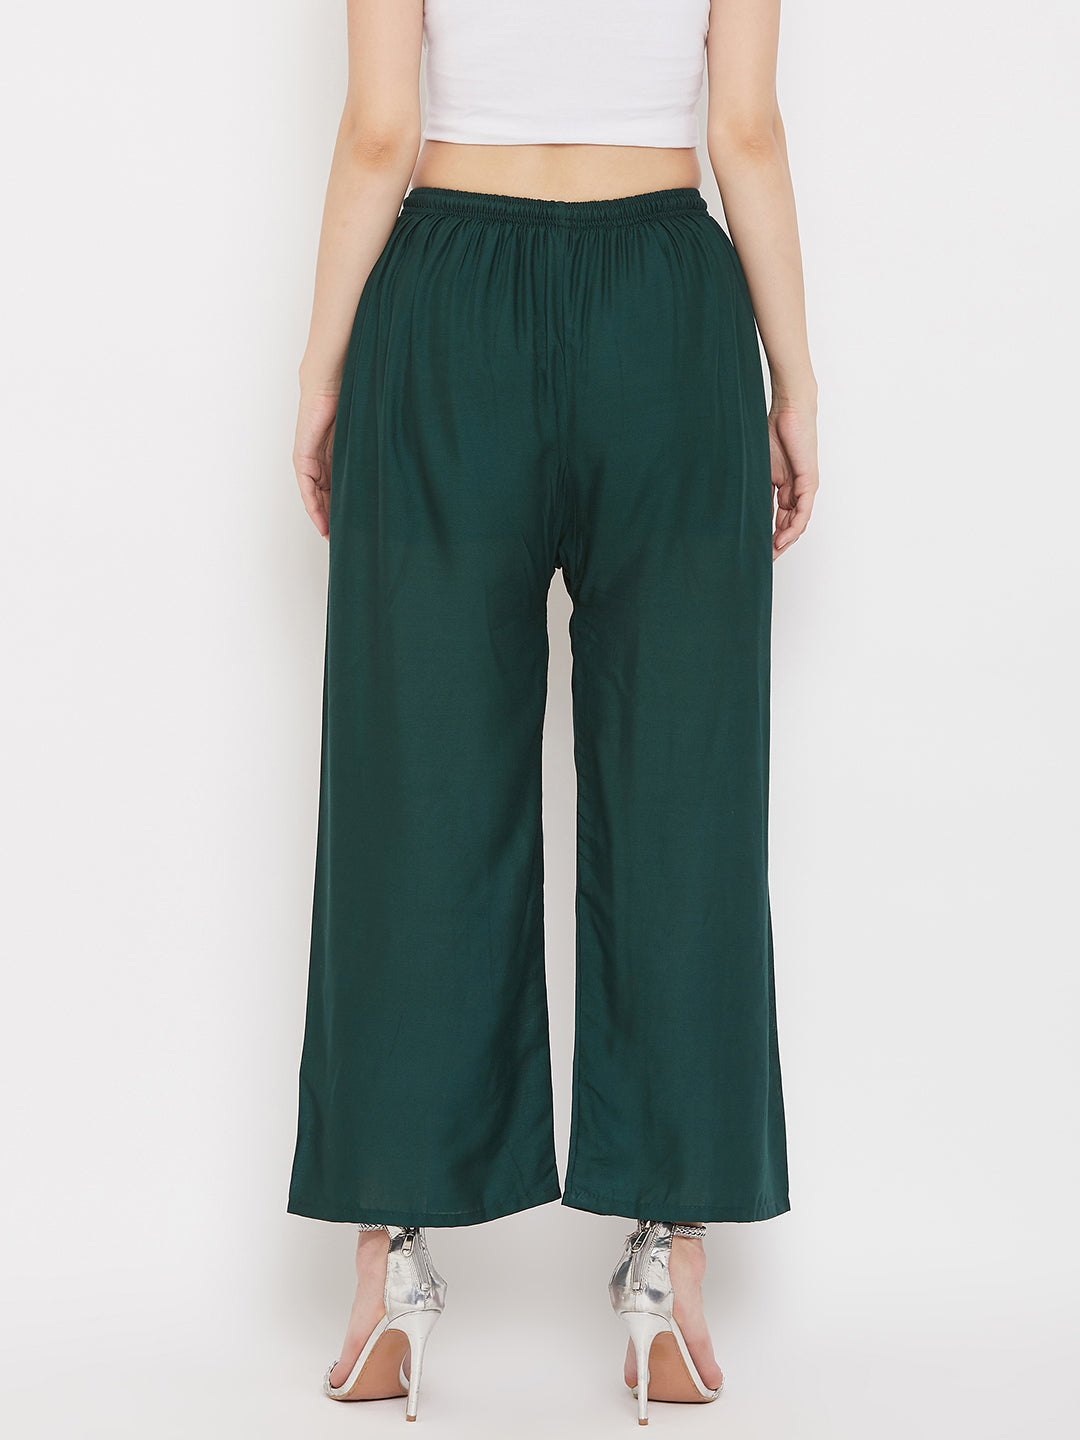 Buy Green Trousers & Pants for Women by Twin Birds Online | Ajio.com